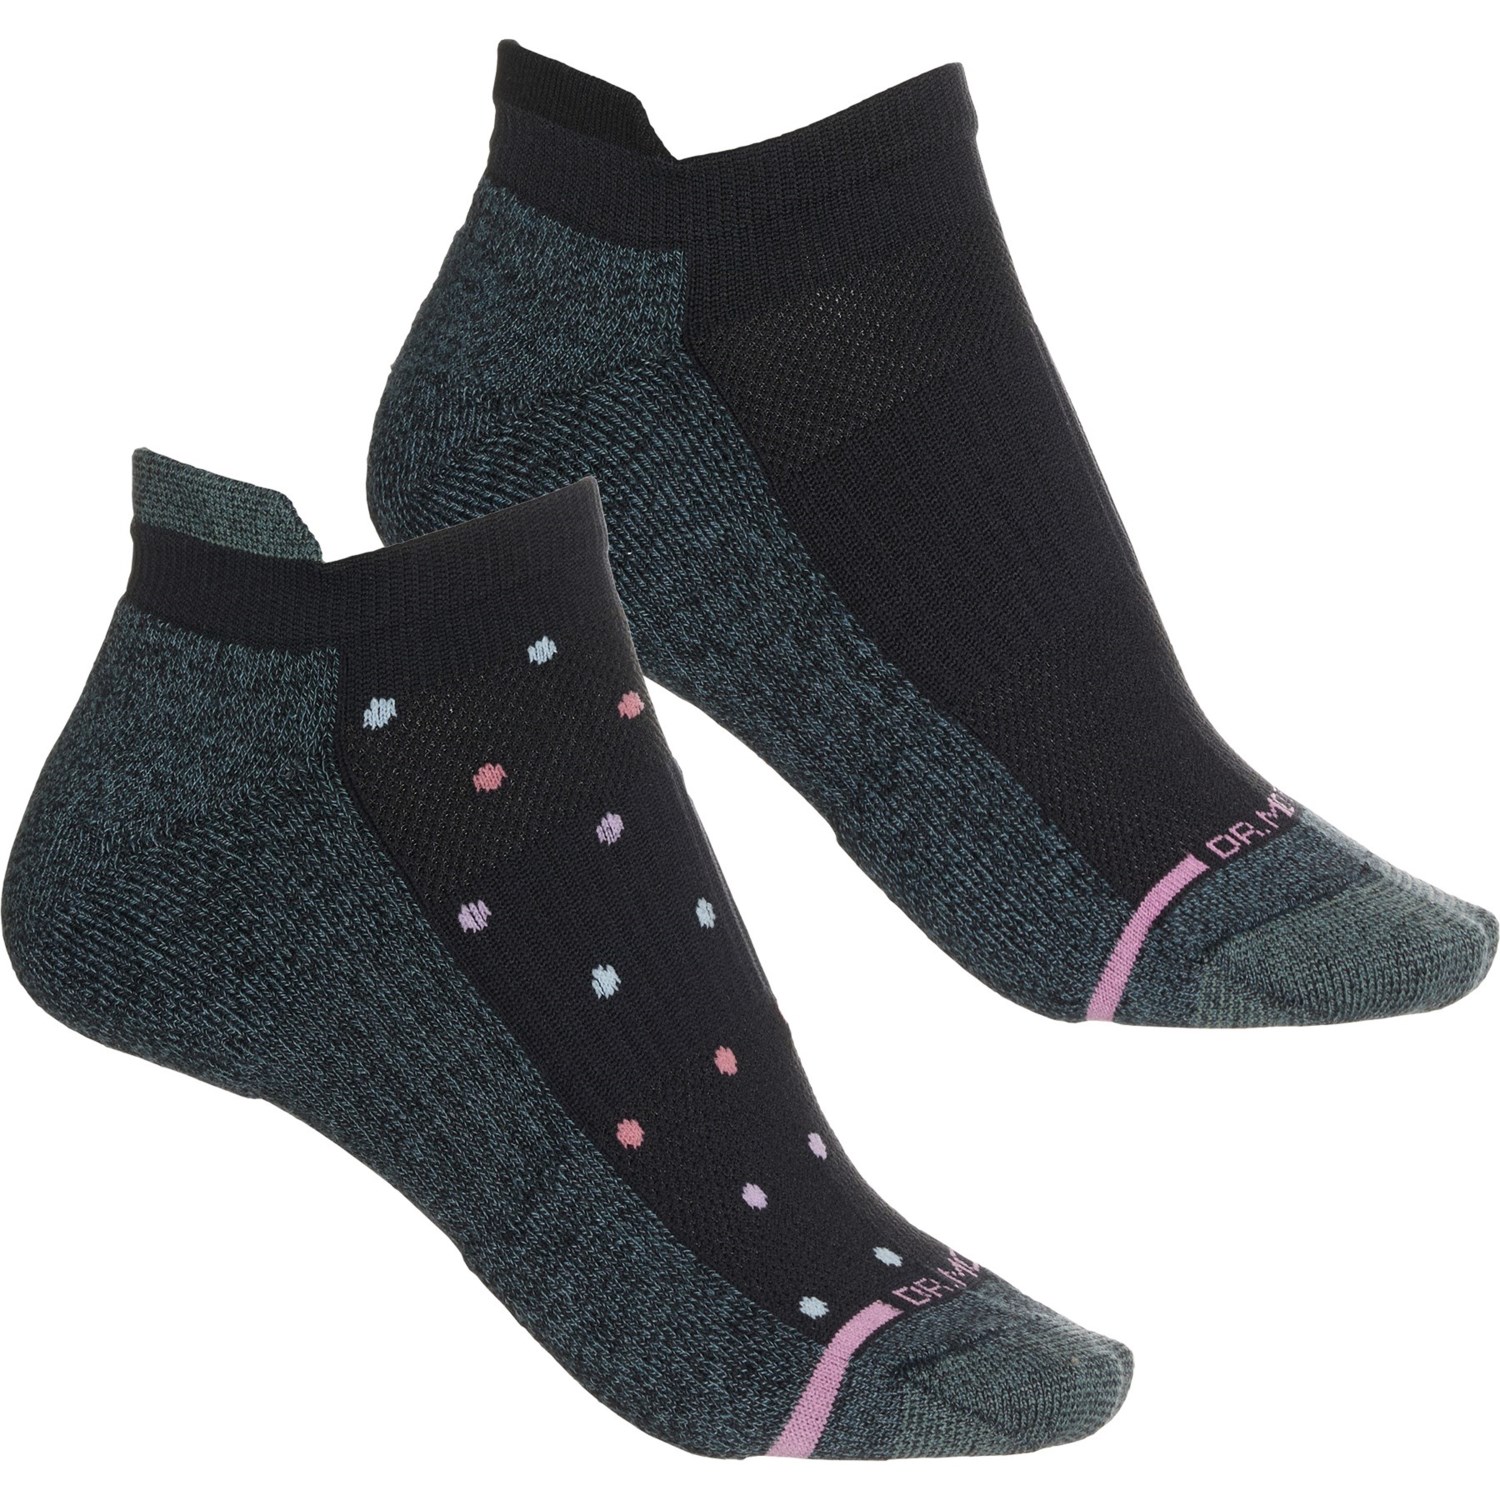 Athleisure Compression Socks For Men & Women, Dr. Motion